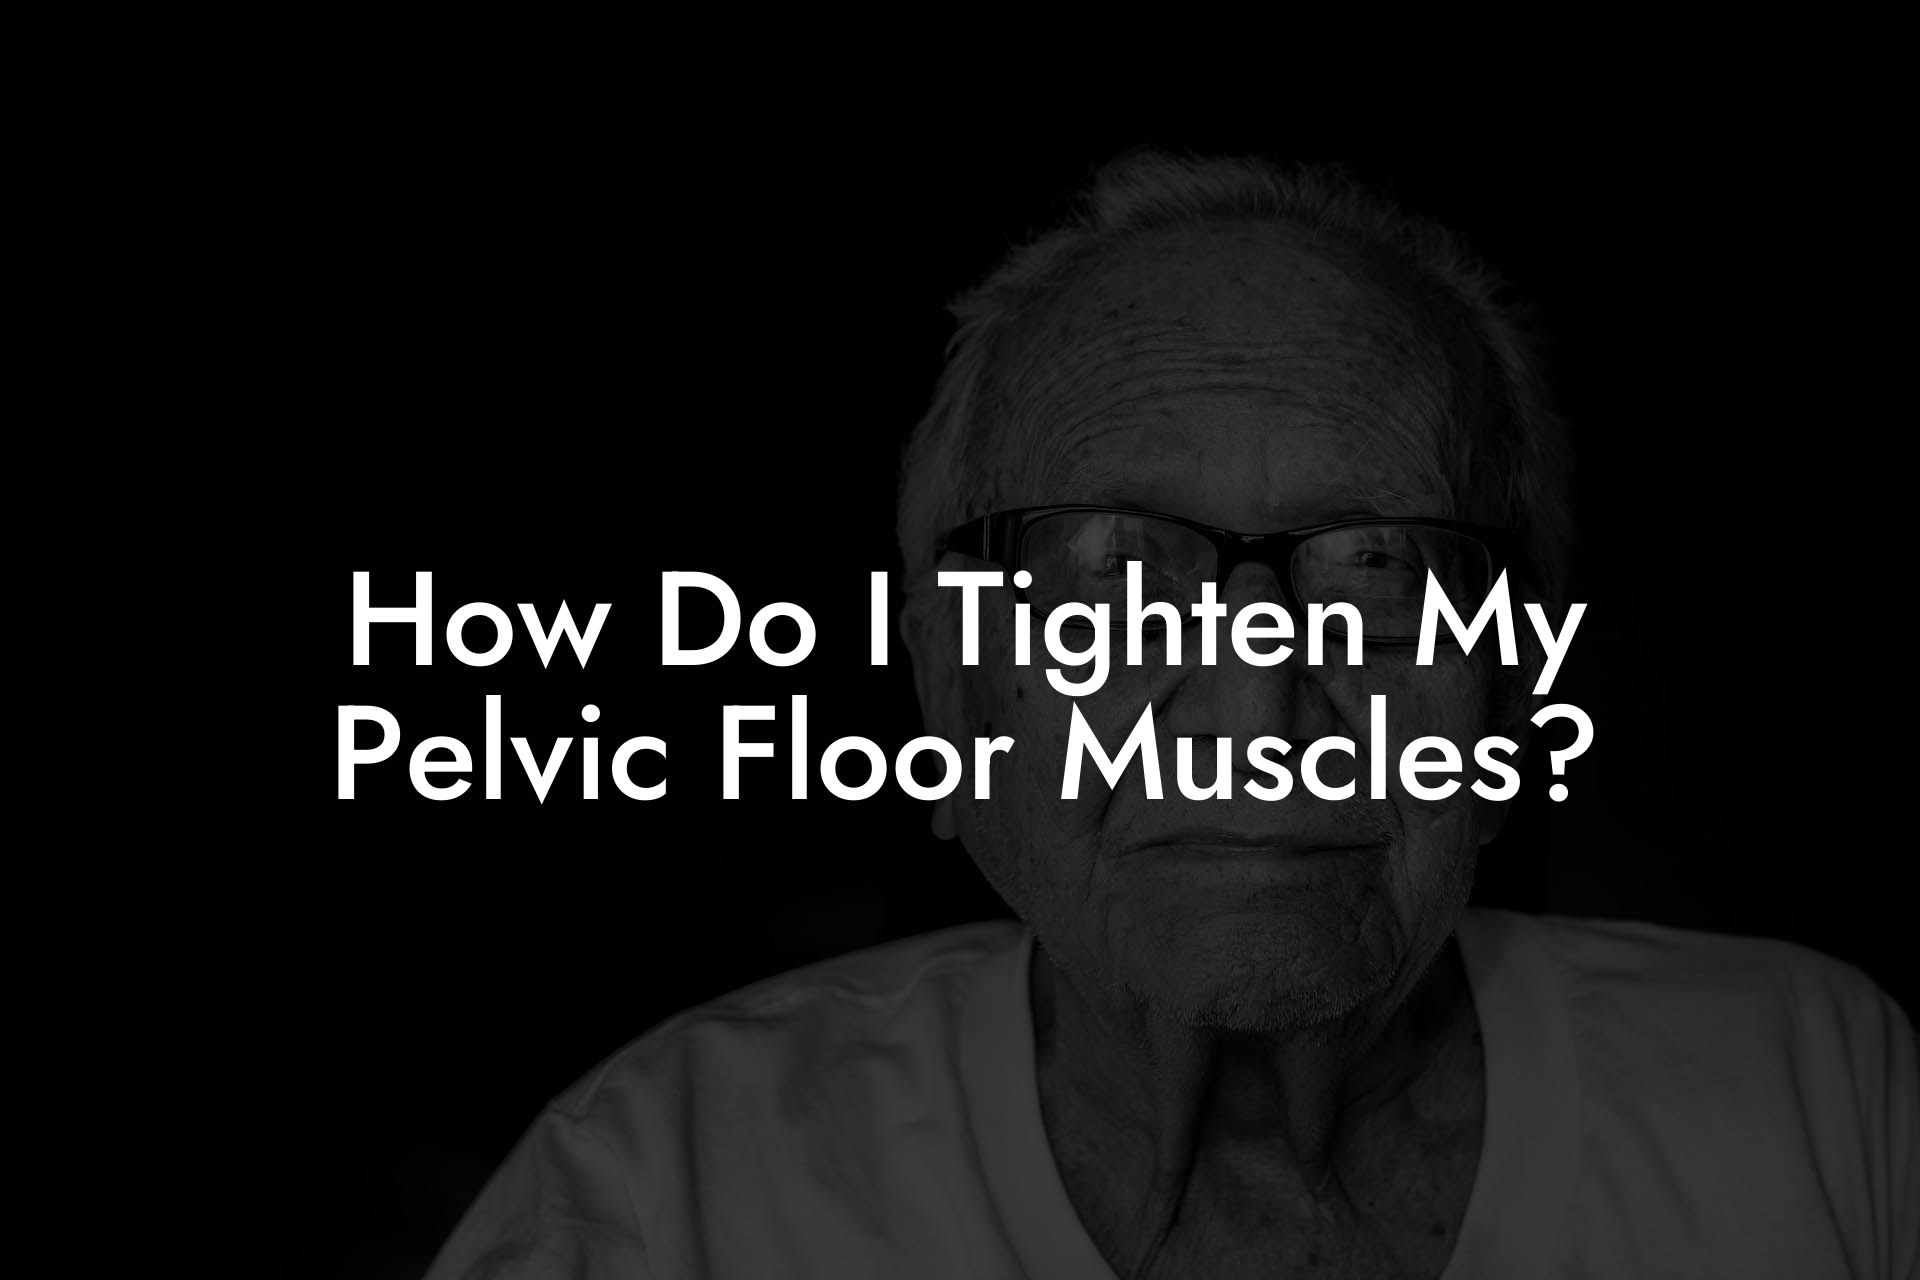 How Do I Tighten My Pelvic Floor Muscles?